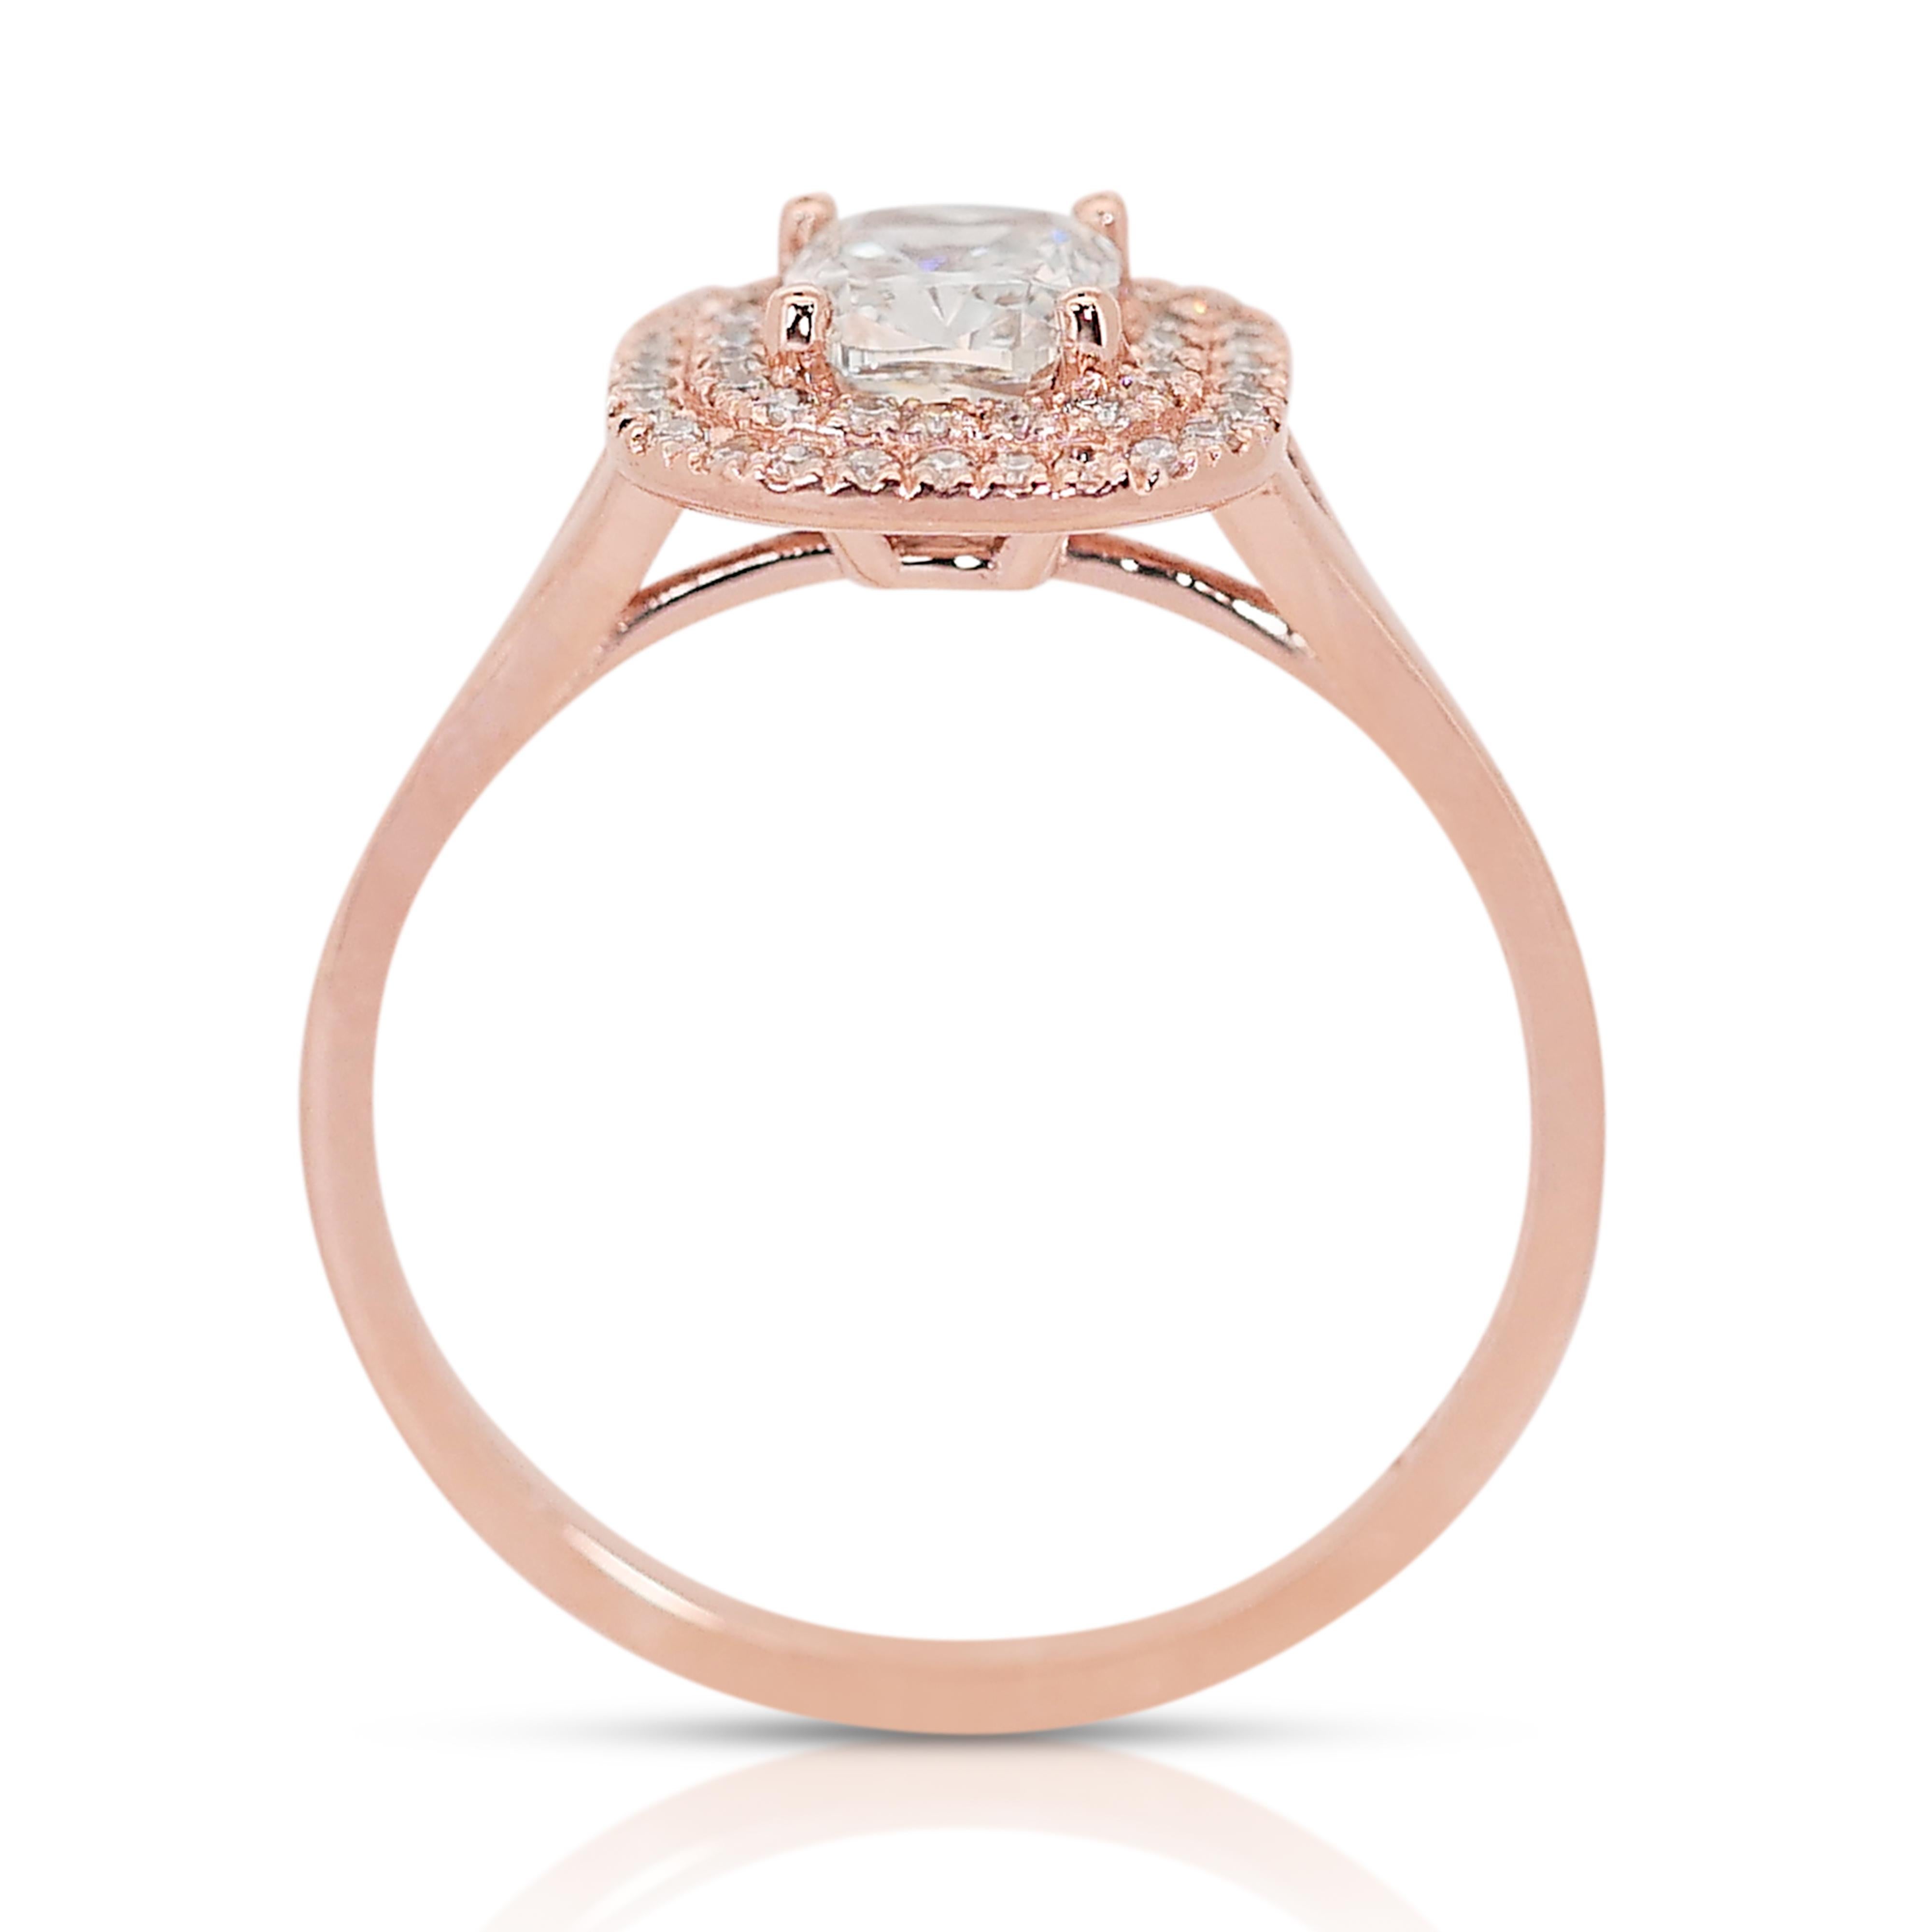 Glamorous 14k Rose Gold Double Halo Diamond Ring w/1.09 ct - IGI Certified 2